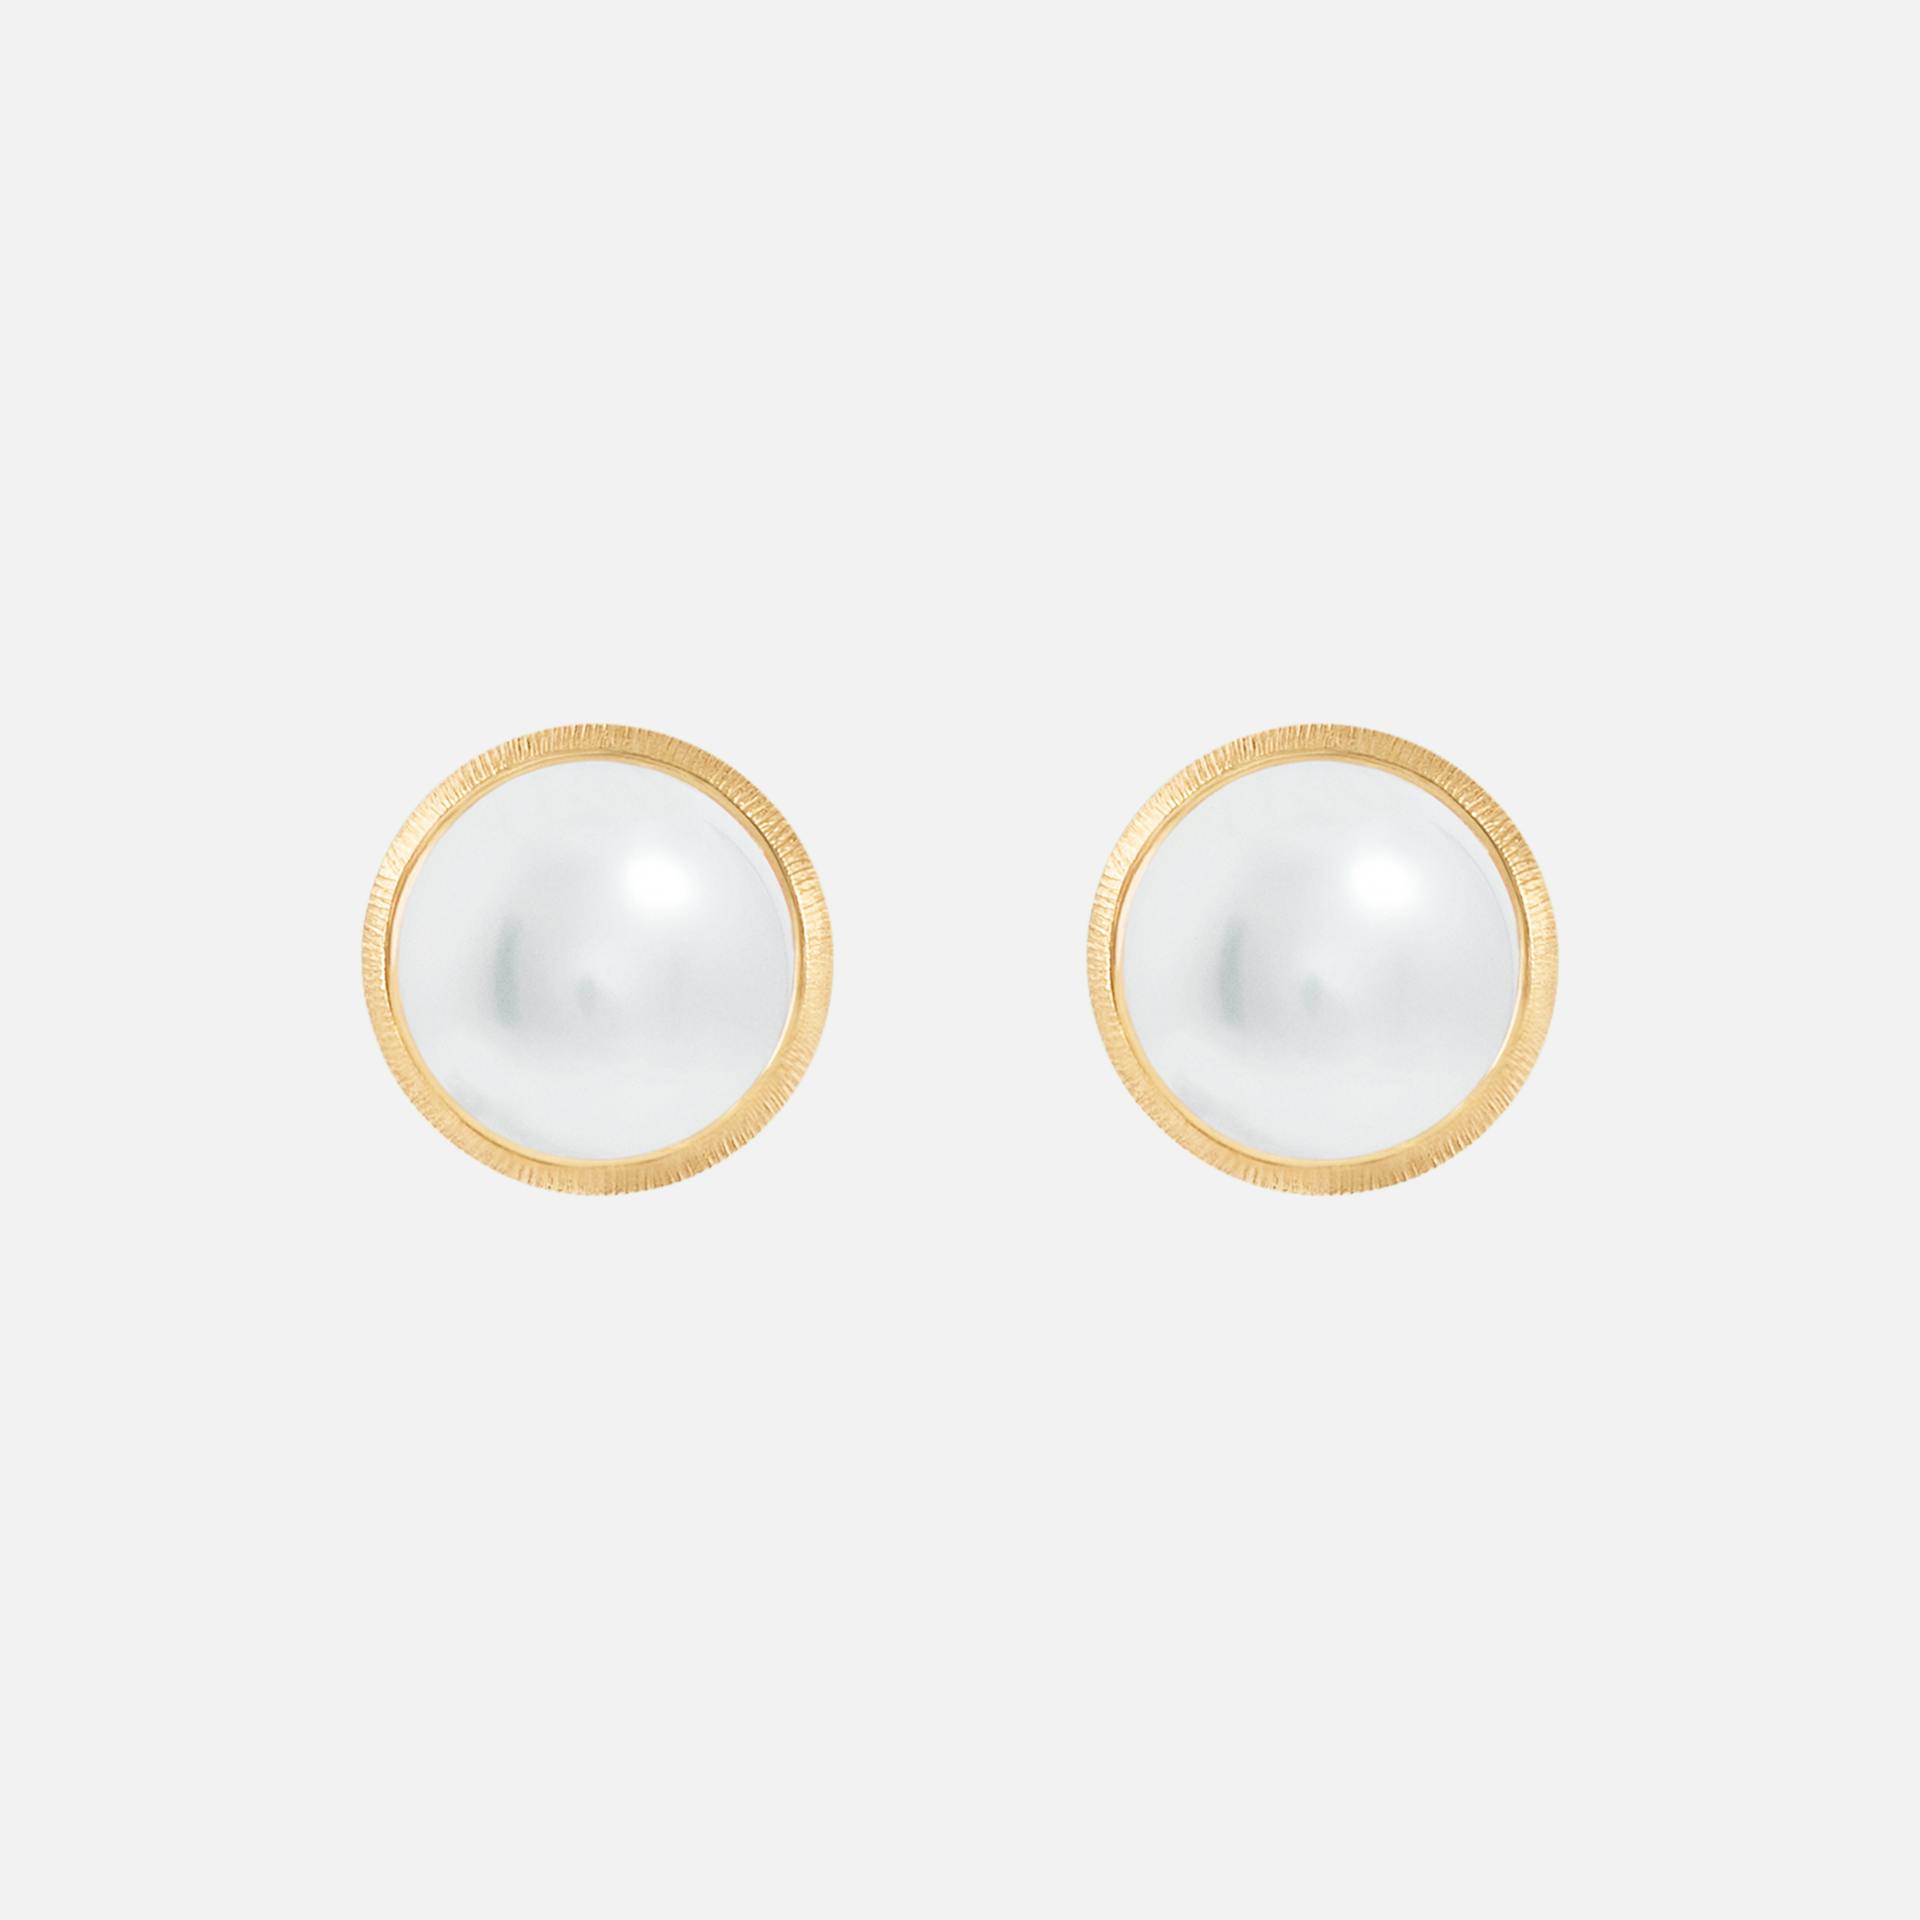 Lotus Stud Earrings in 18 Karat Gold with Pearls  |  Ole Lynggaard Copenhagen 